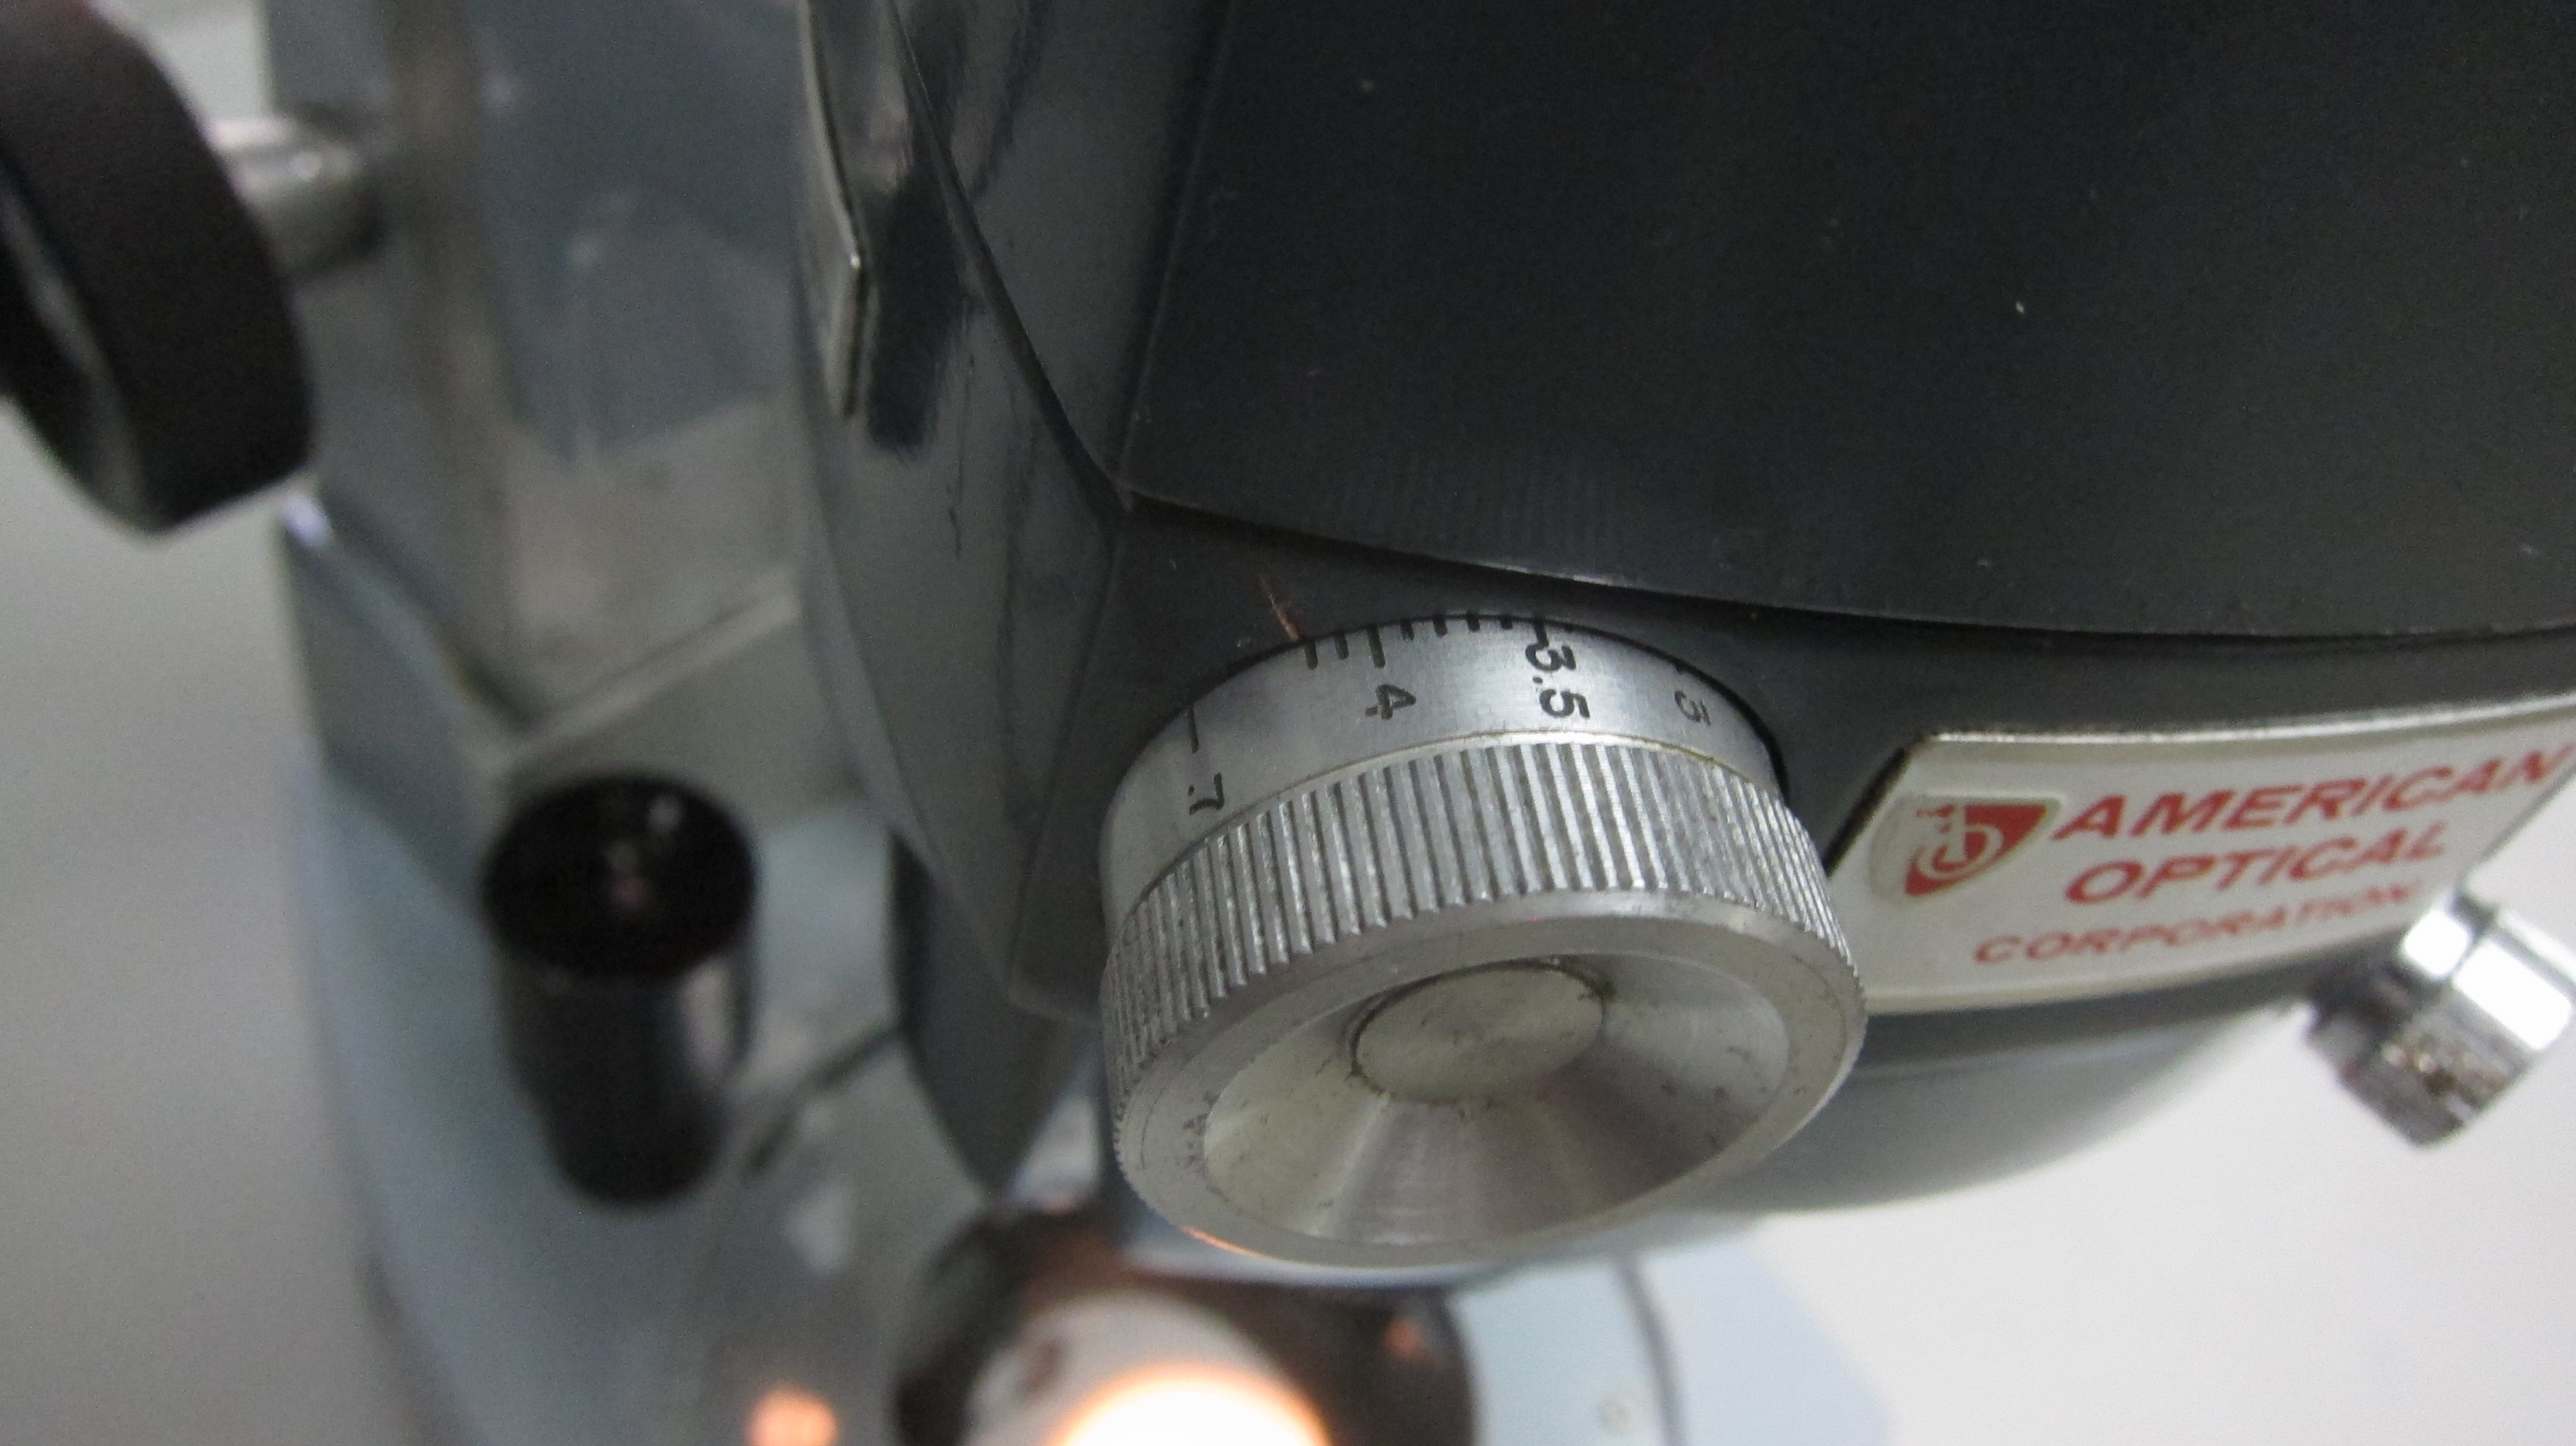 AO American Optical 570 B&L Bausch lomb Sterozoom Nikon Stereo Microscope Watchmaking watch repair restoration equipment for sal